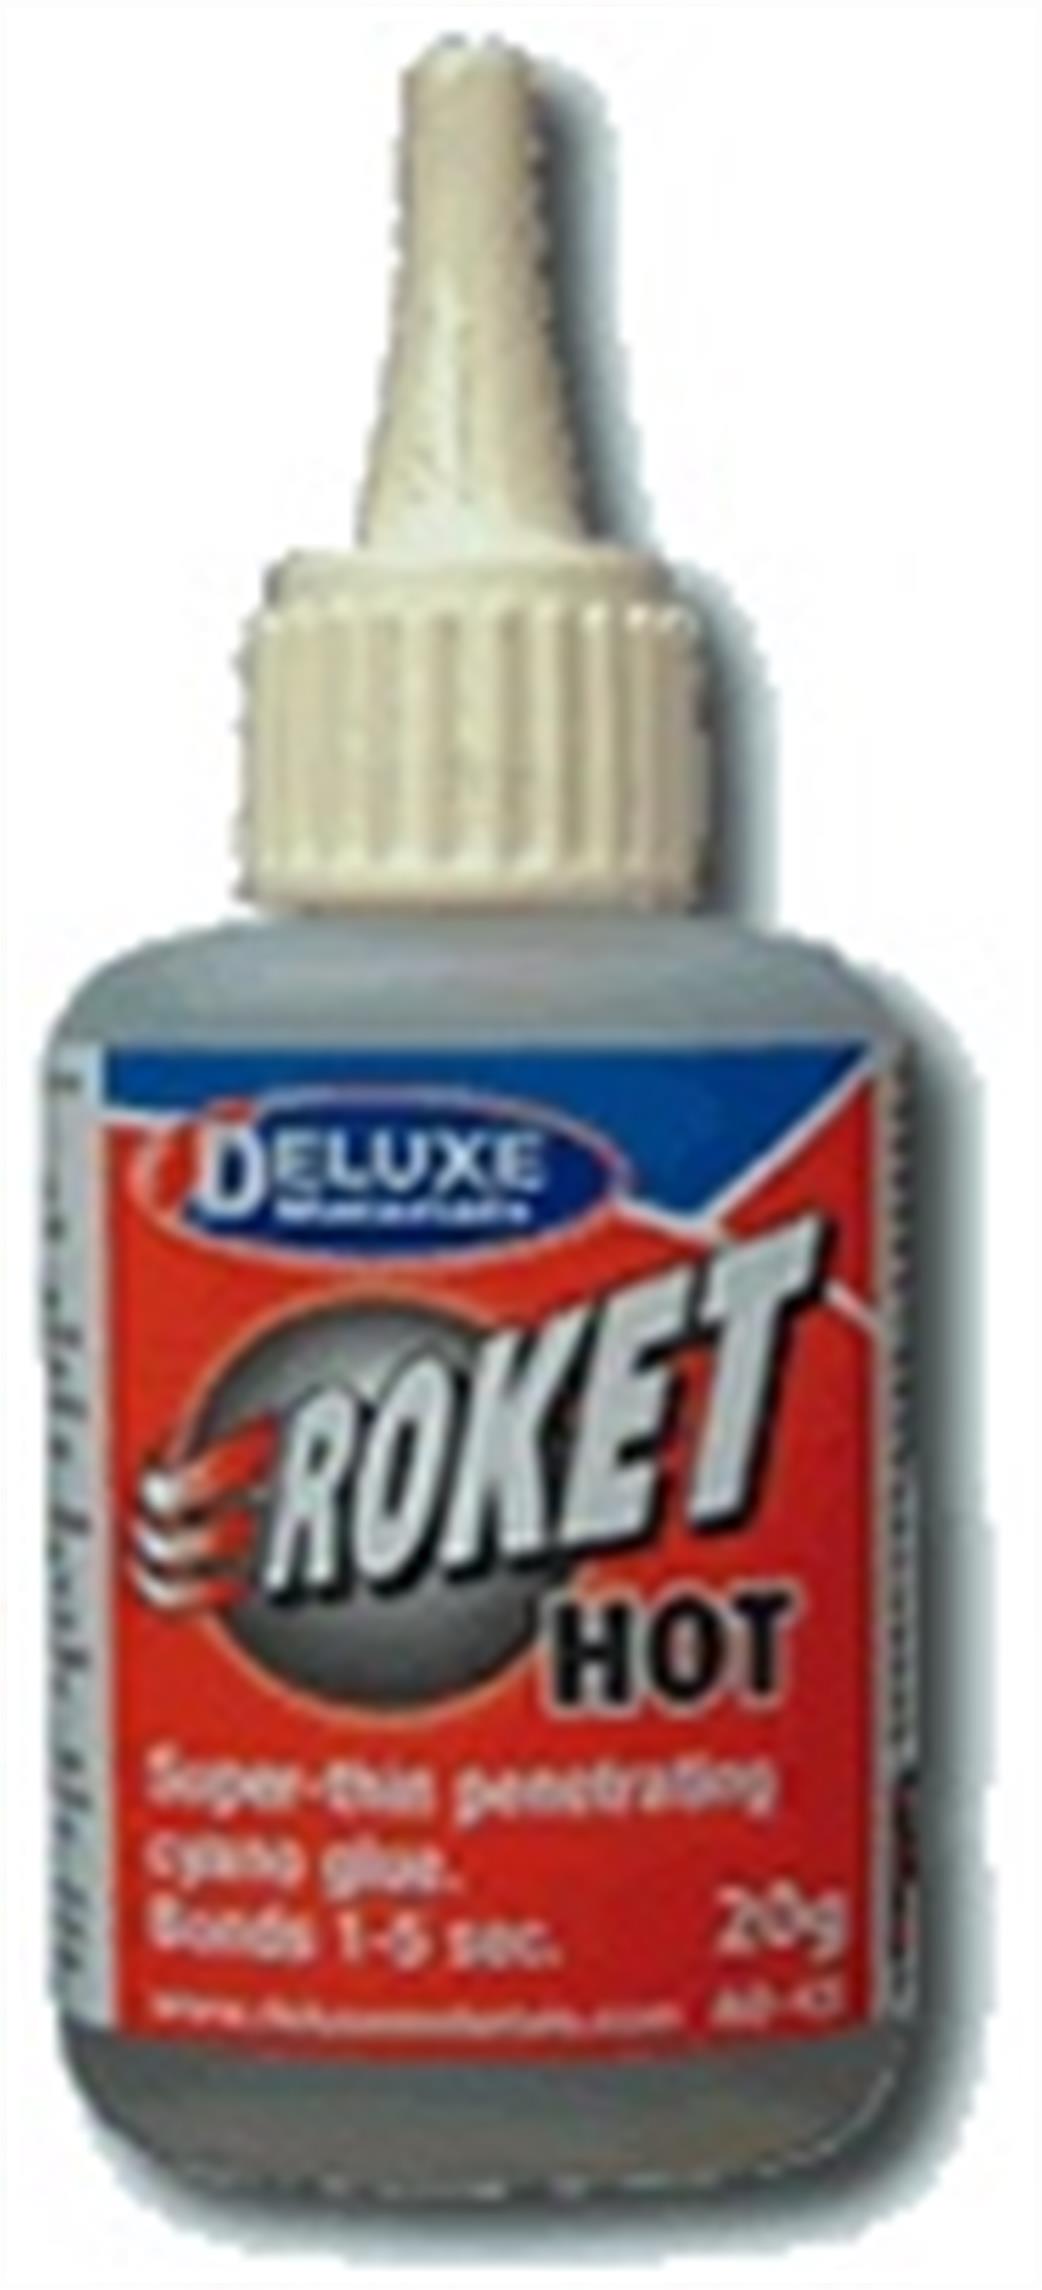 Deluxe Materials  AD43 Roket Hot Thin Cyano Super Glue 20g